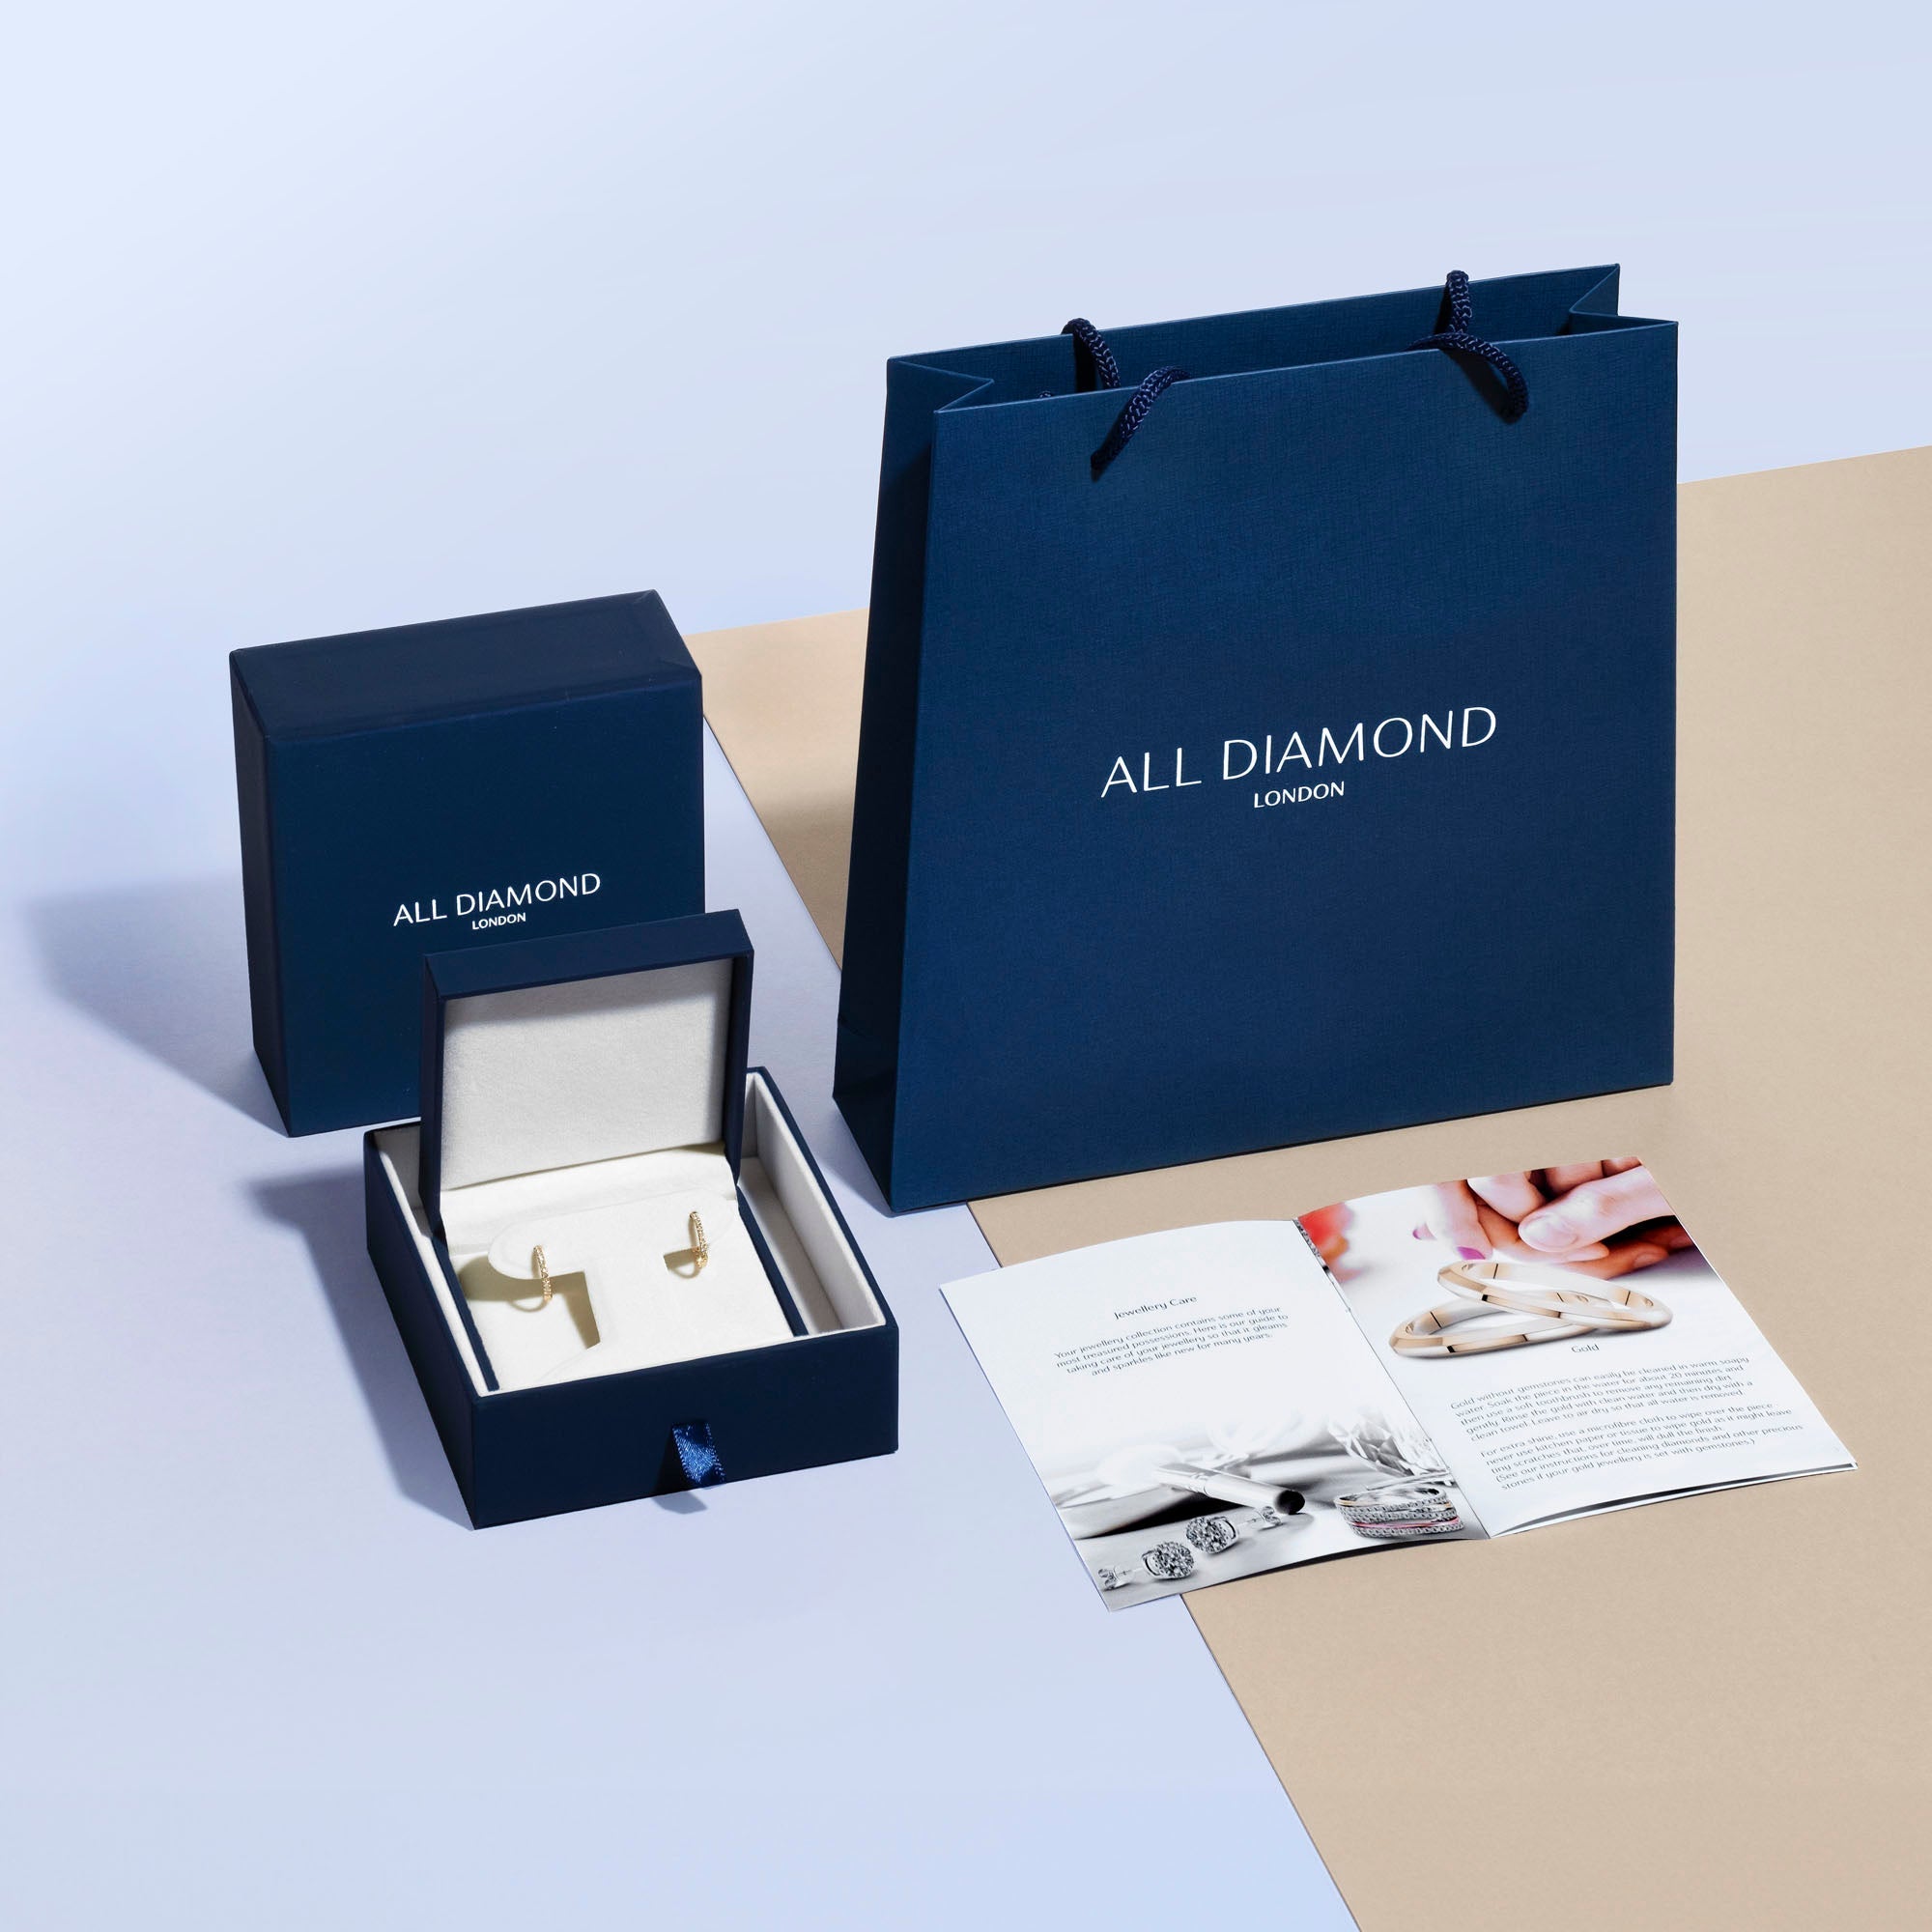 18k White Gold Diamond Cluster Earrings 1.00ct in G/SI Quality - All Diamond